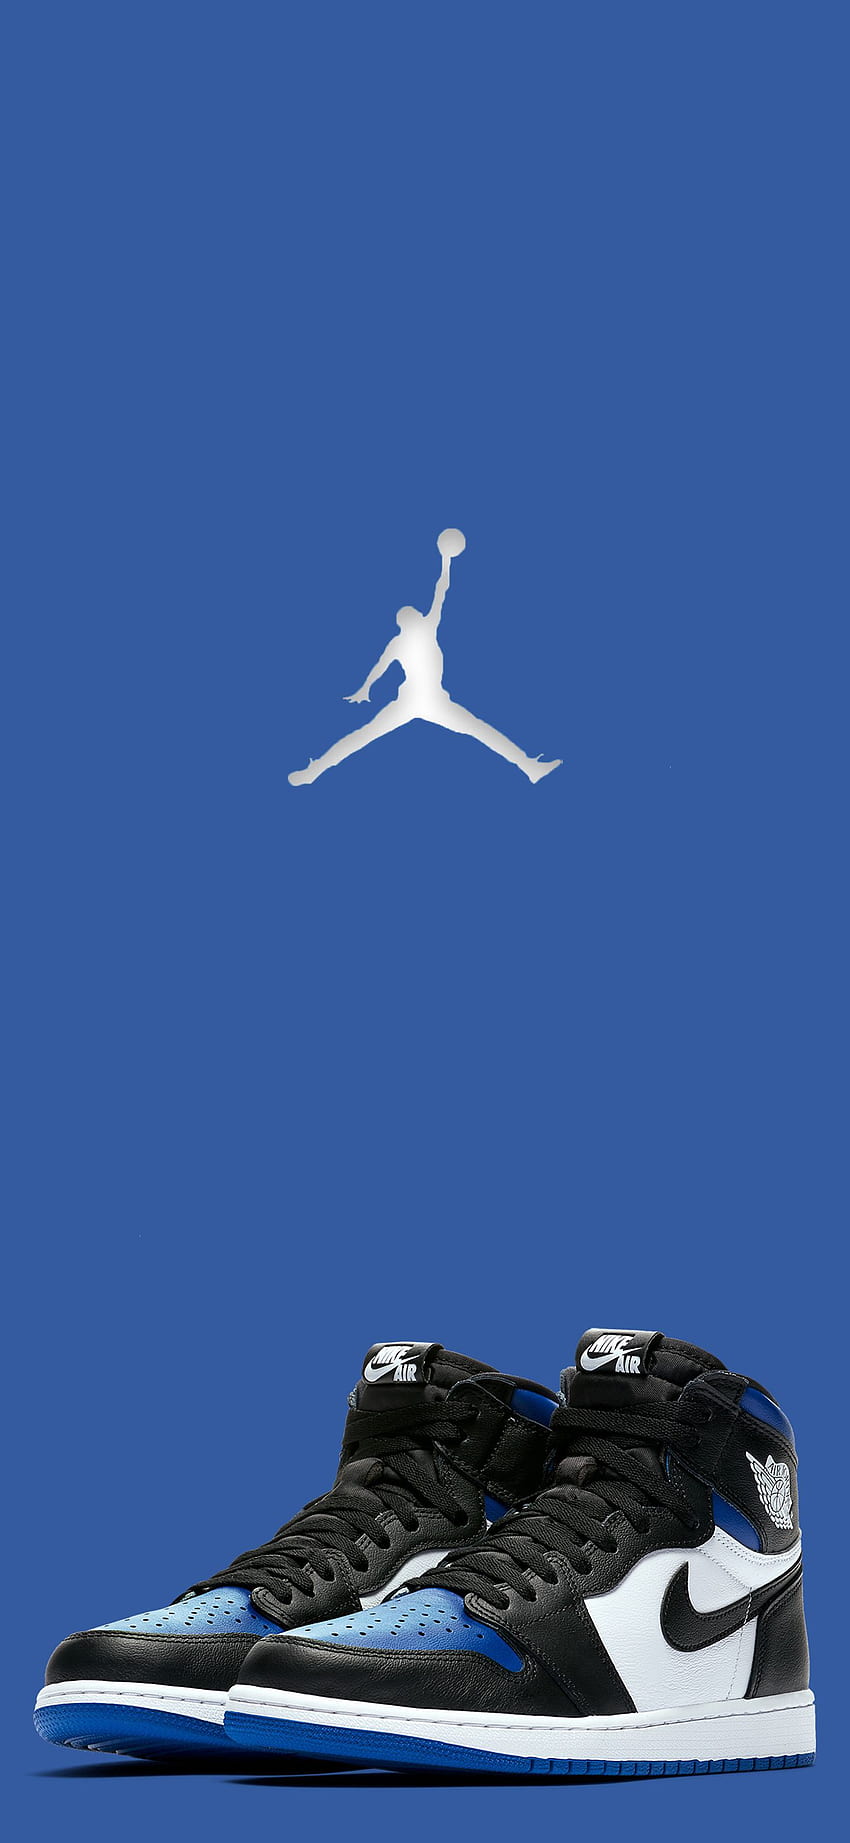 Jordans Wallpapers Shoes For Desktop In High Quality  Jordan HD Wallpaper  Free Download  FancyOdds